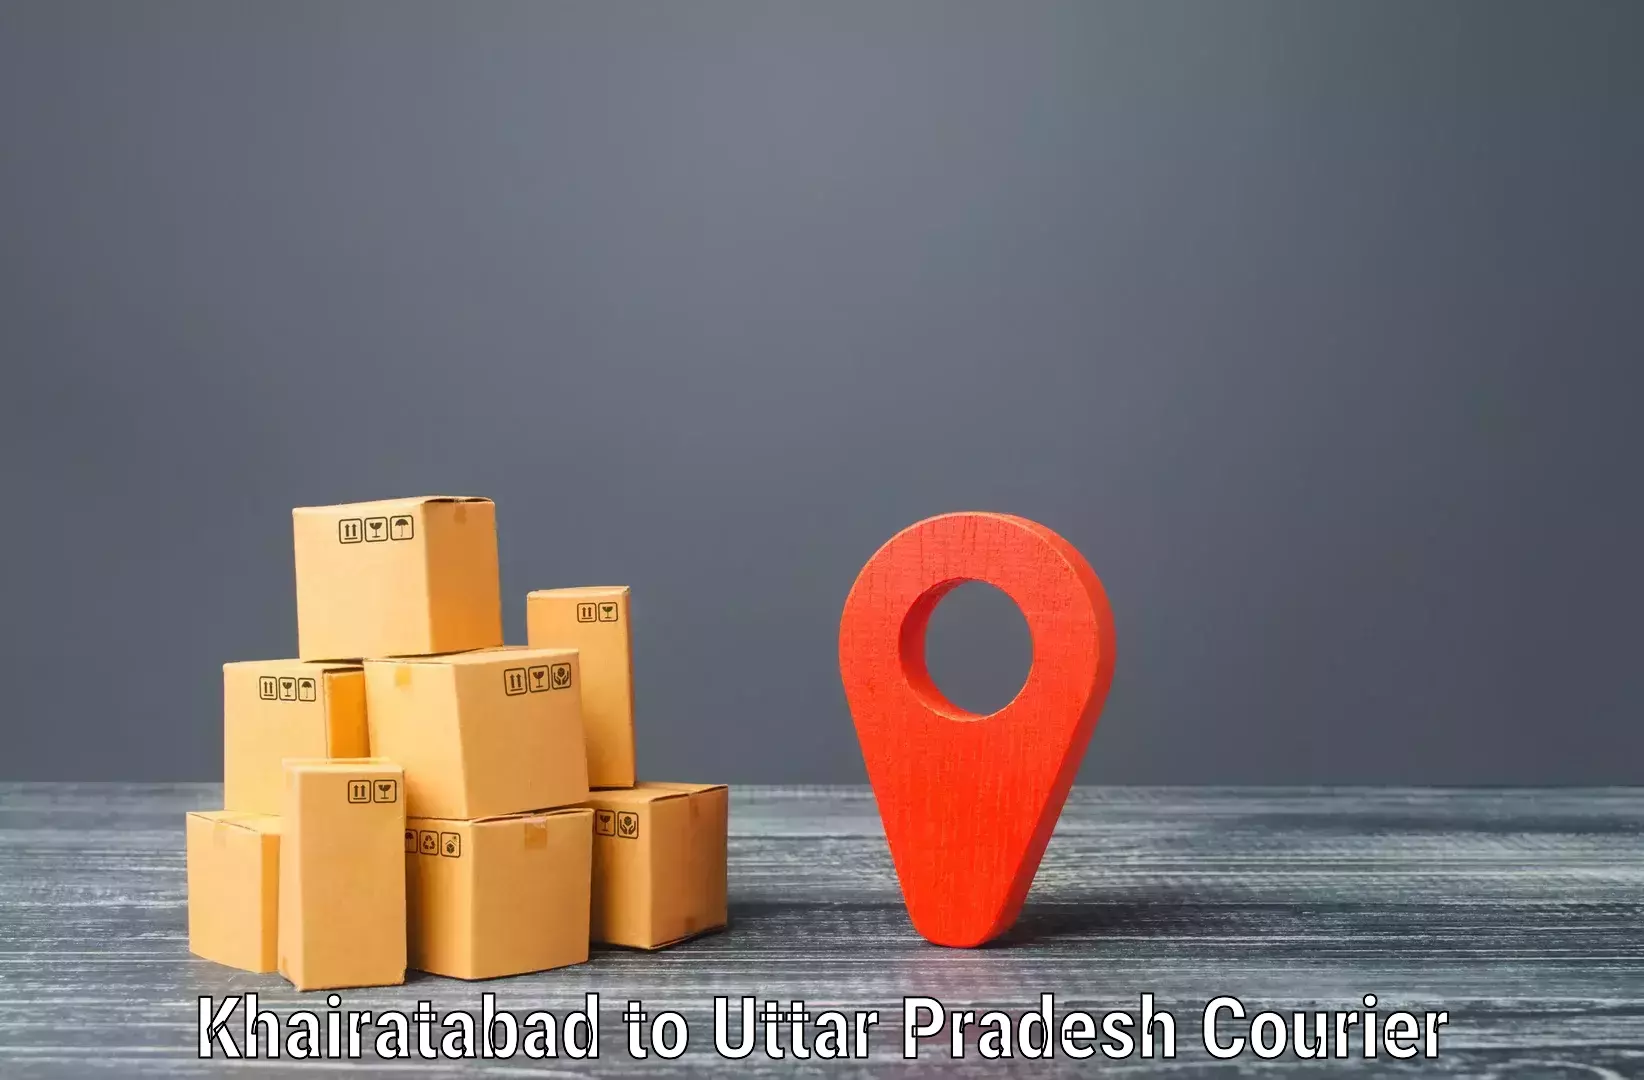 Same-day delivery options Khairatabad to Baksha